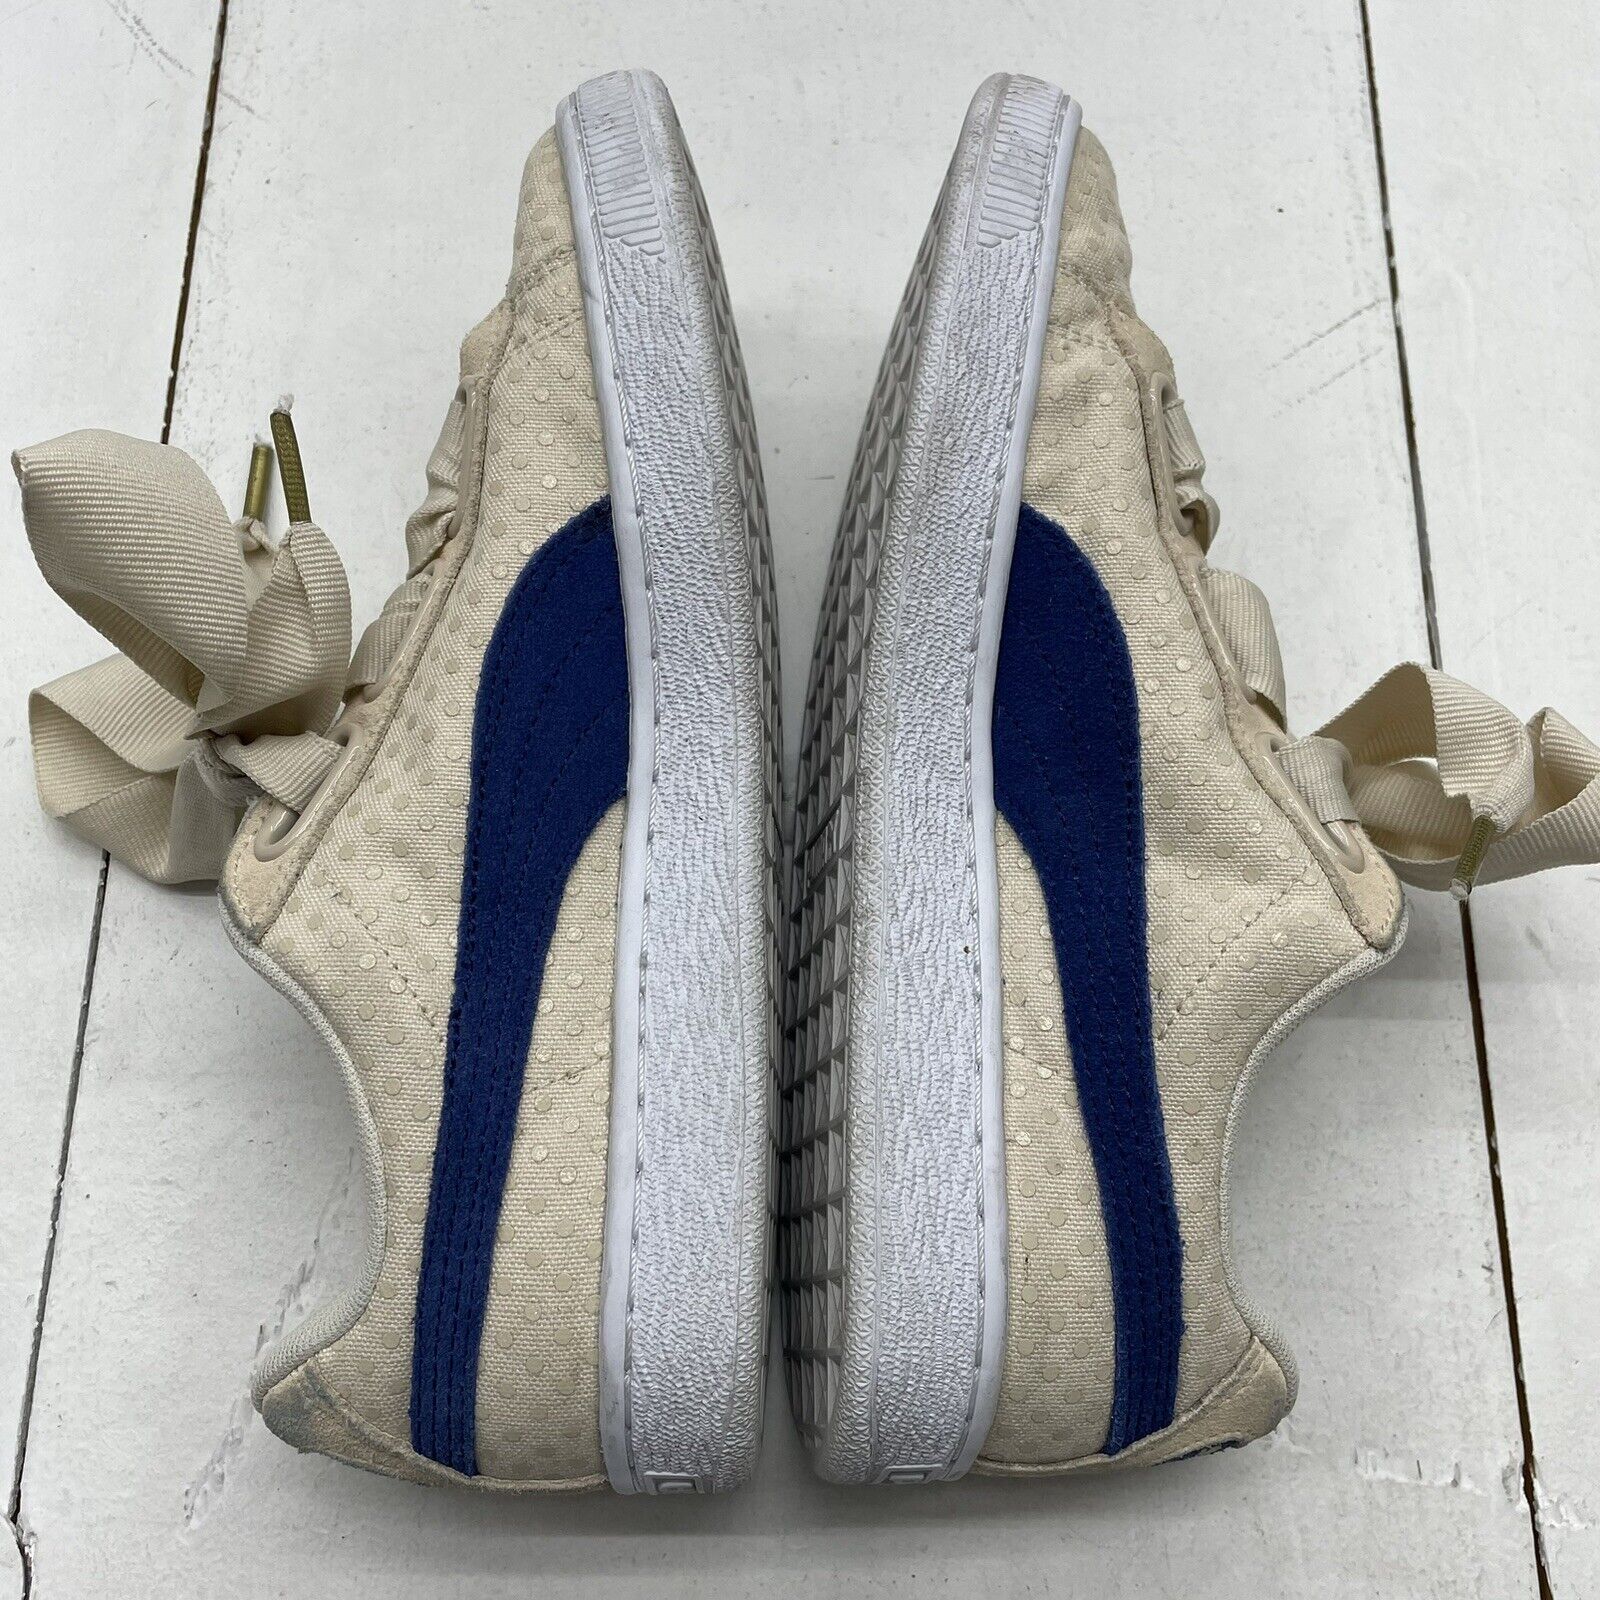 Puma Basket Heart Denim Oatmeal Blue Shoes Casual Ribbon Laces S - beyond exchange